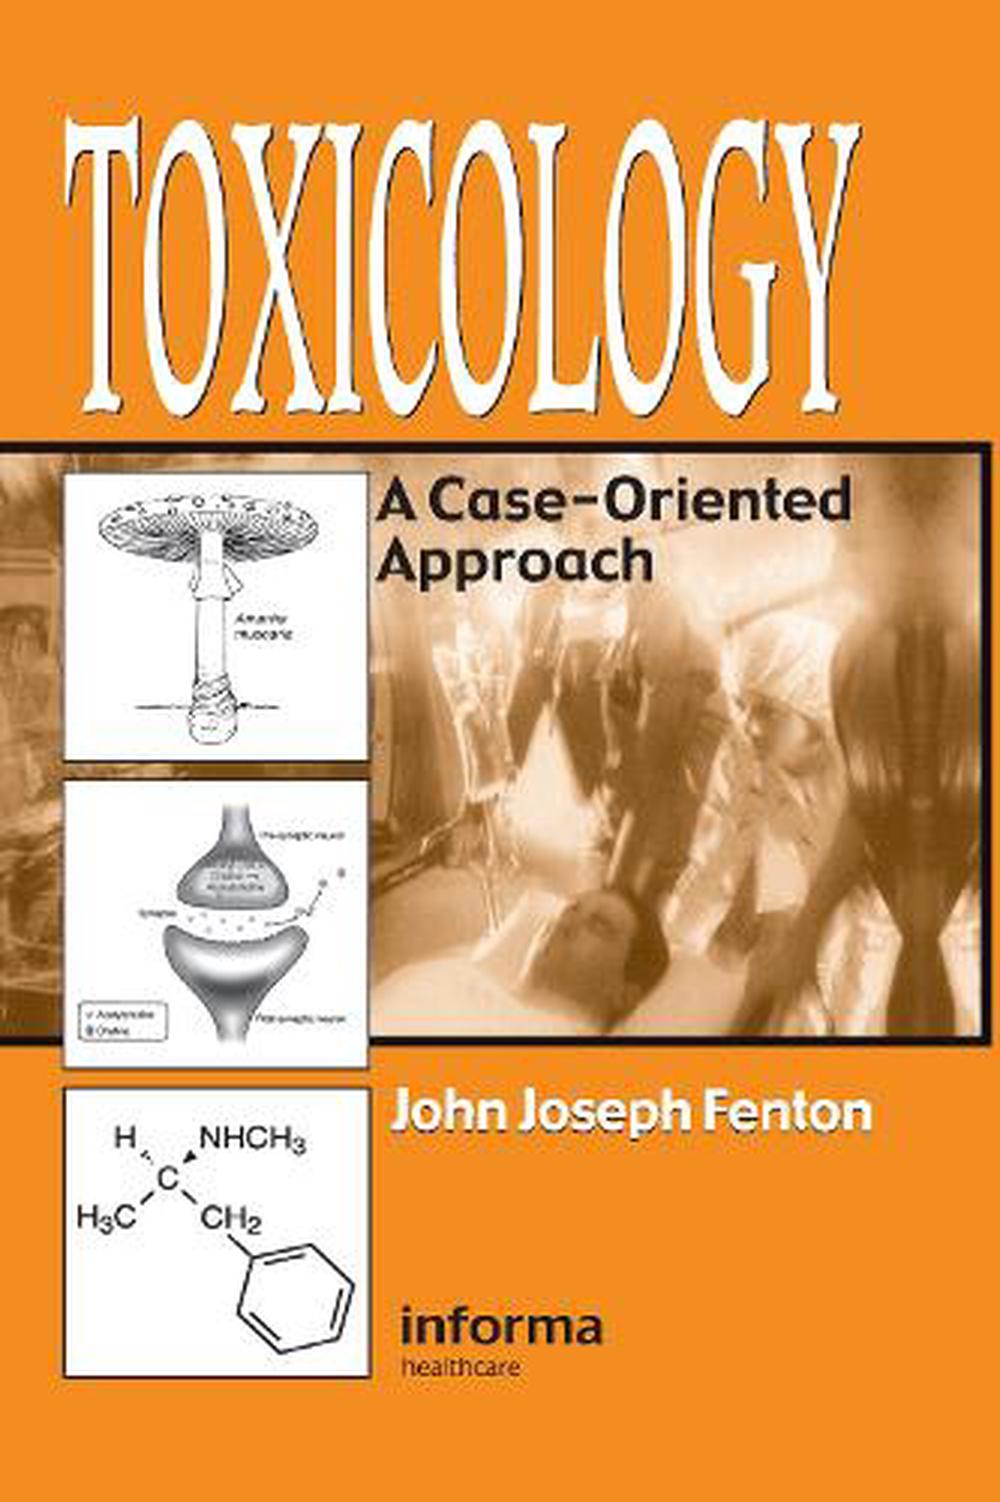 case study on toxicology